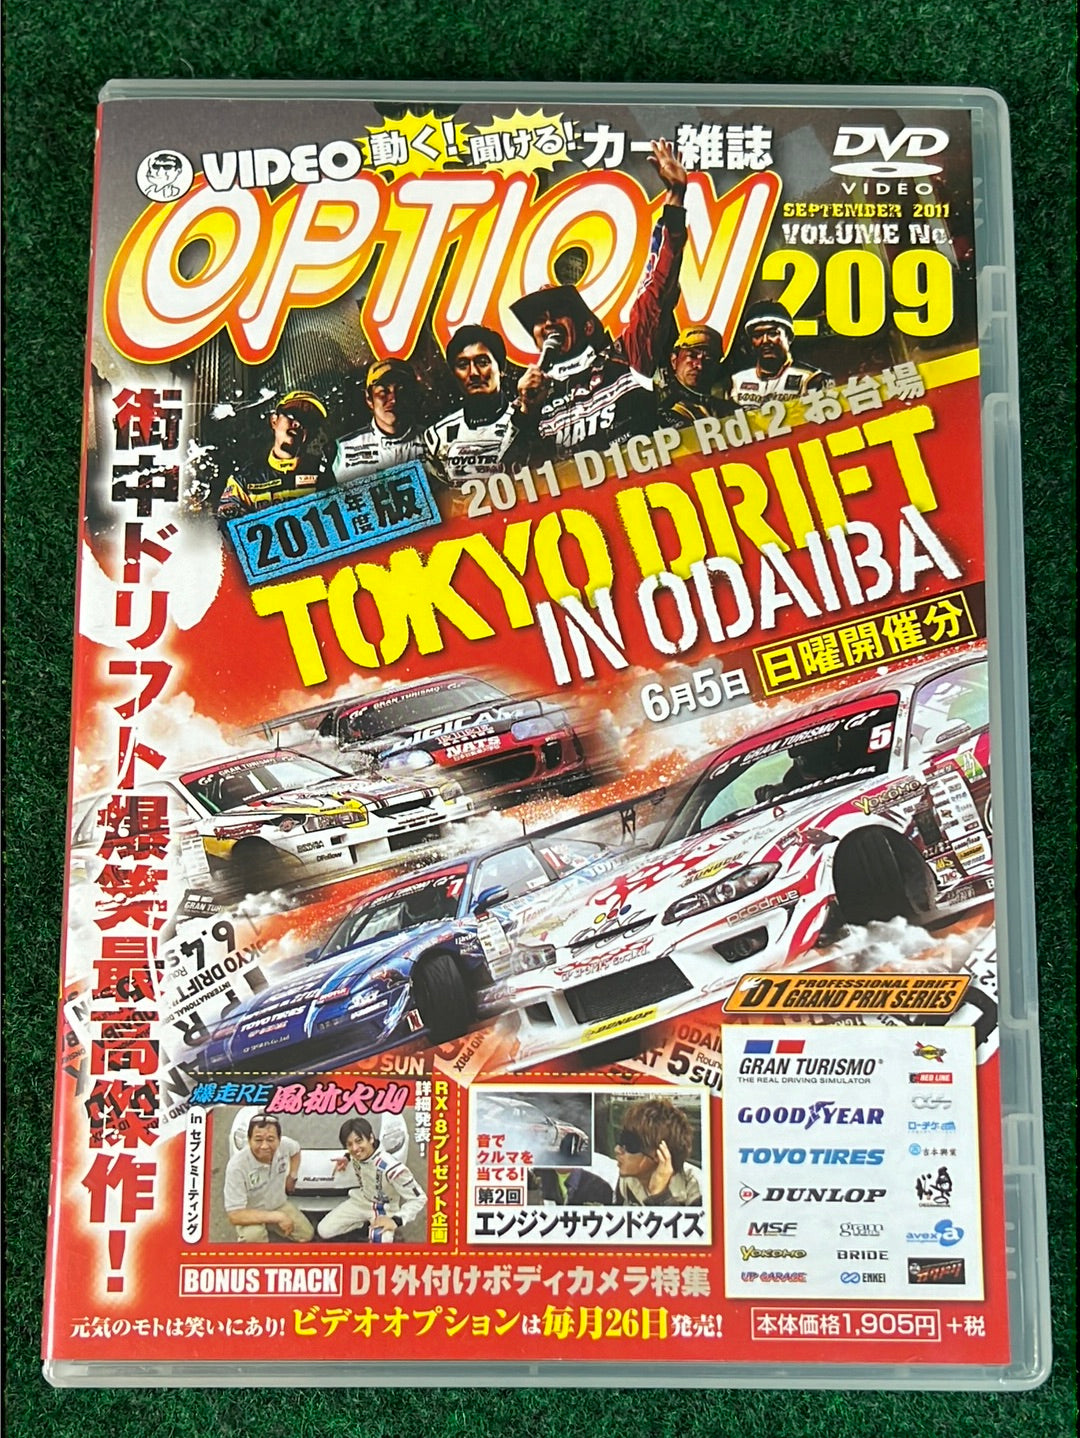 Option Video DVD - September 2011 Vol. 209